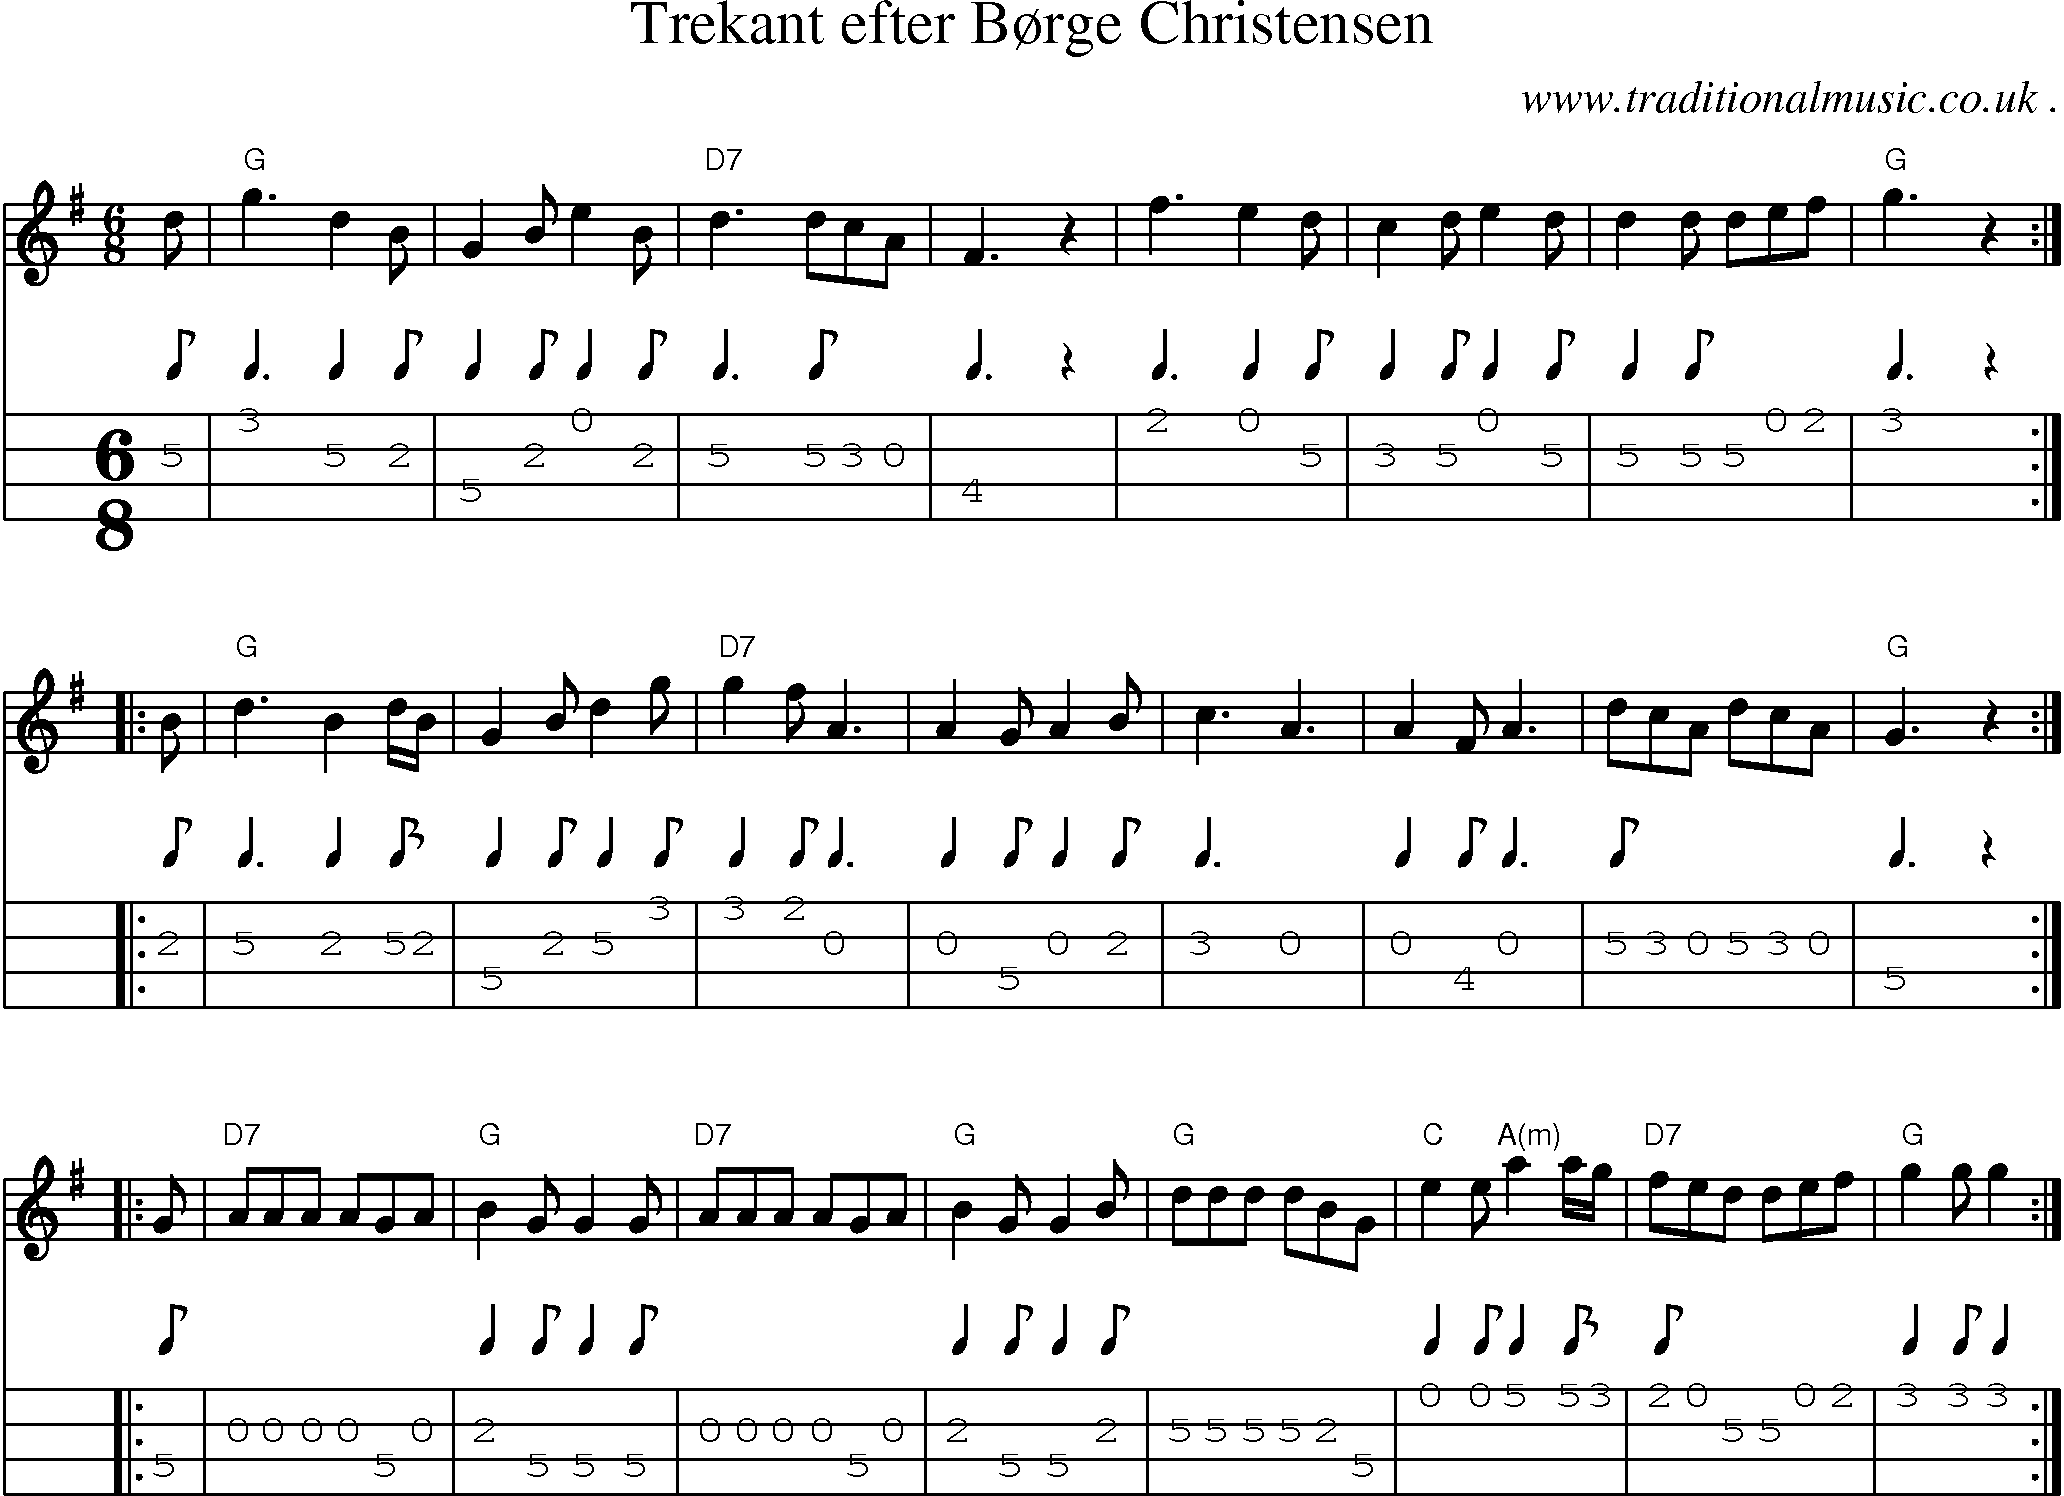 Sheet-music  score, Chords and Mandolin Tabs for Trekant Efter Borge Christensen